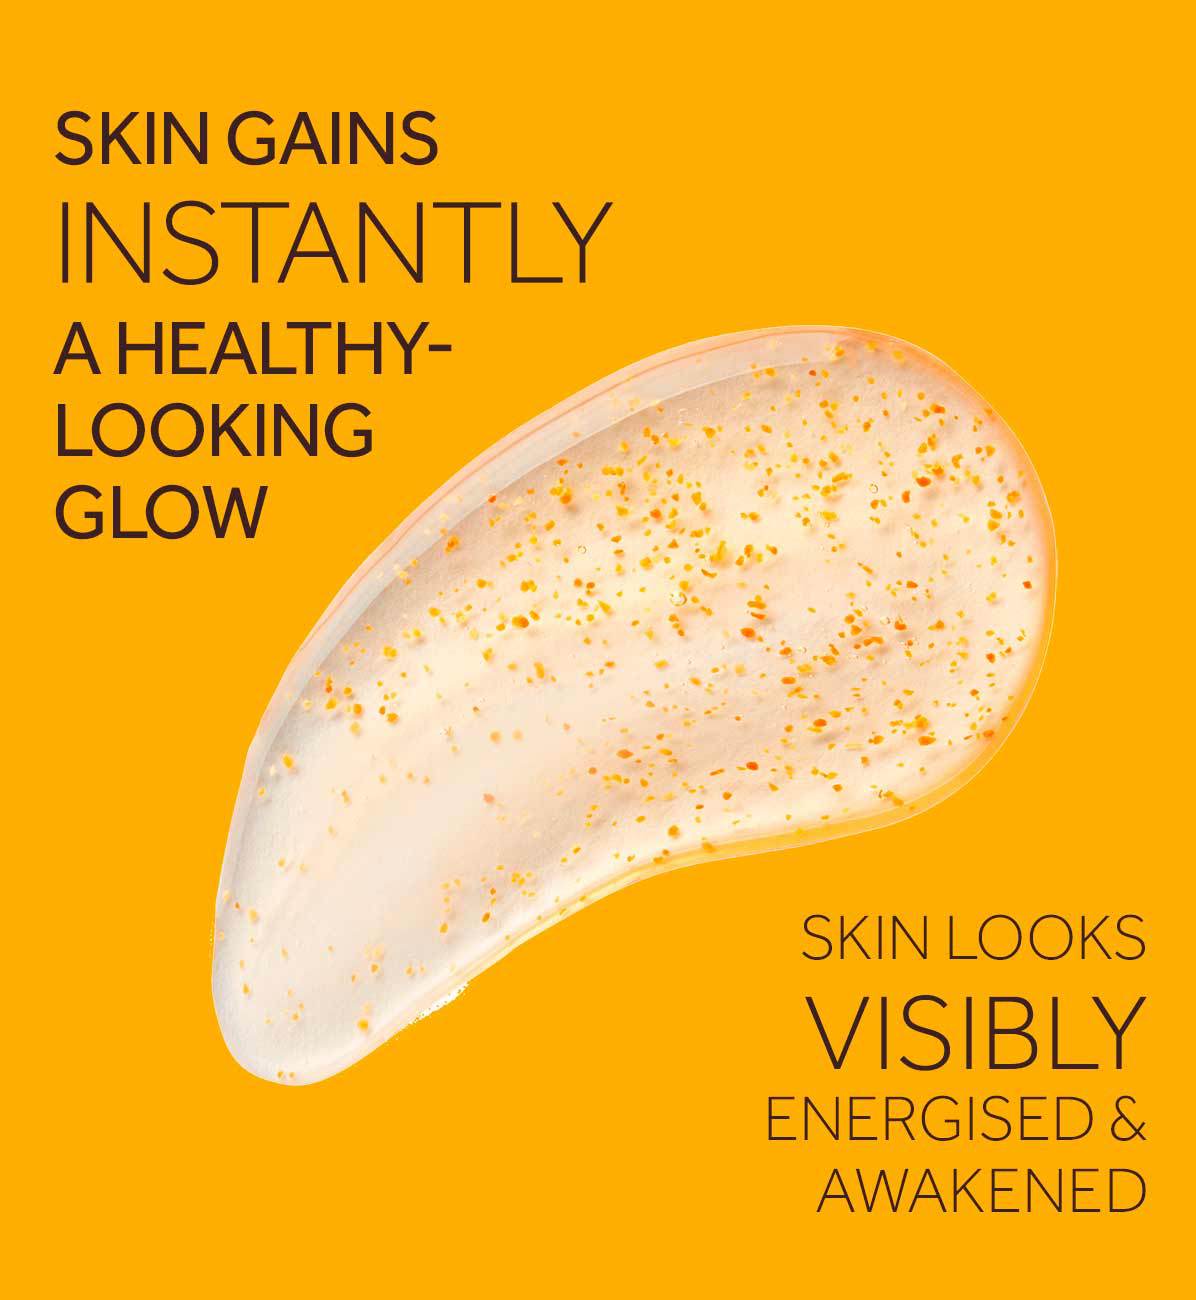 skin gains instantly a healthy-looking glow. Skin looks visibly energised & awakened